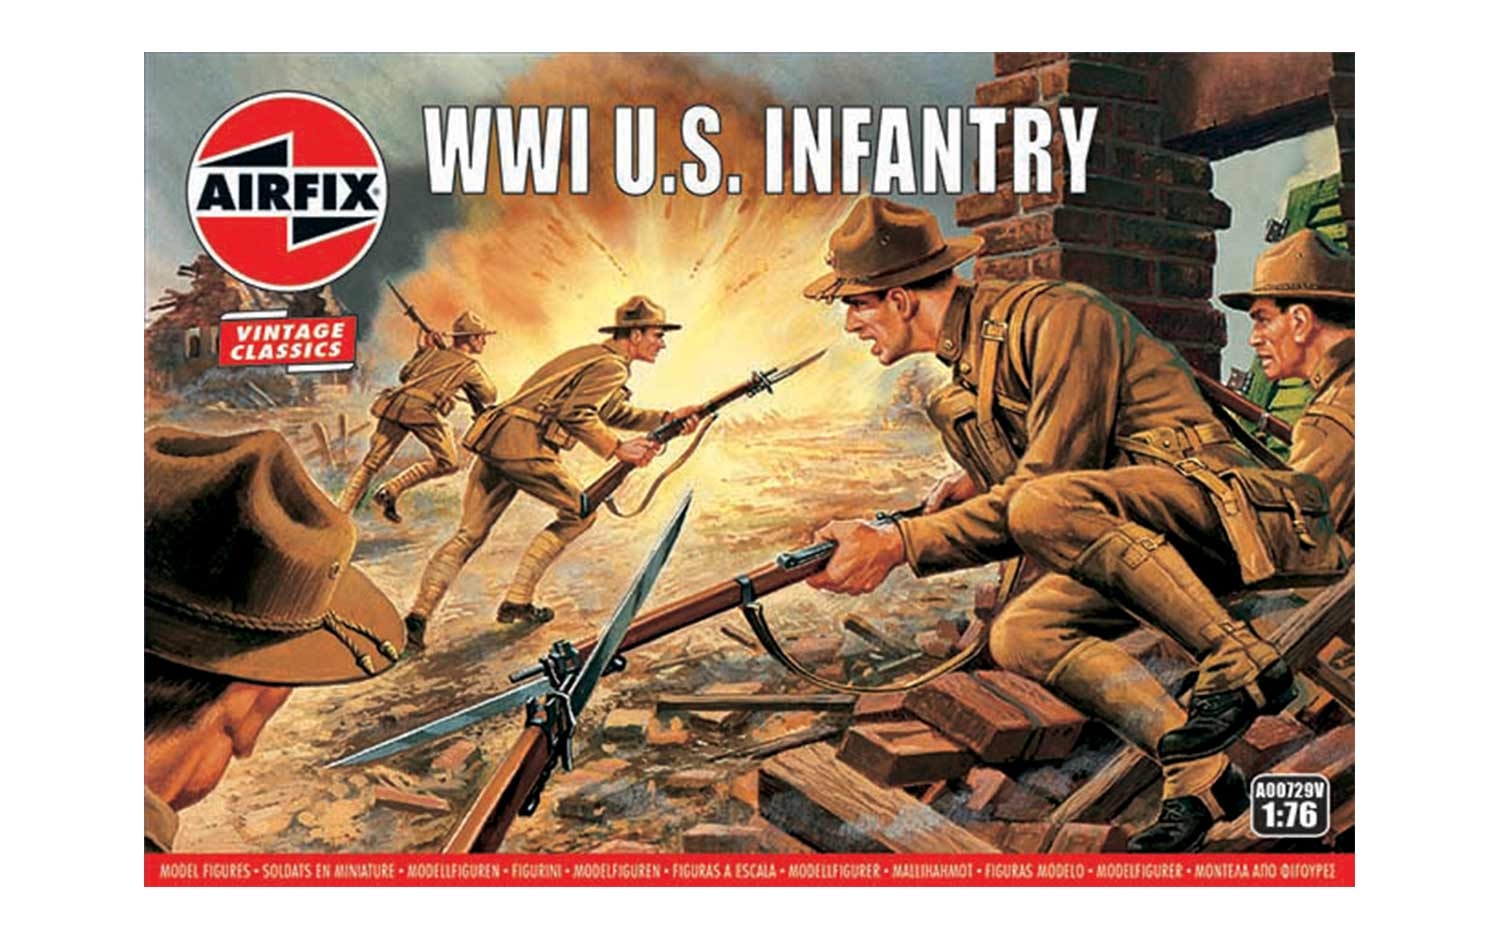 Airfix Vintage Classics - WWI U.S. Infantry 1:76